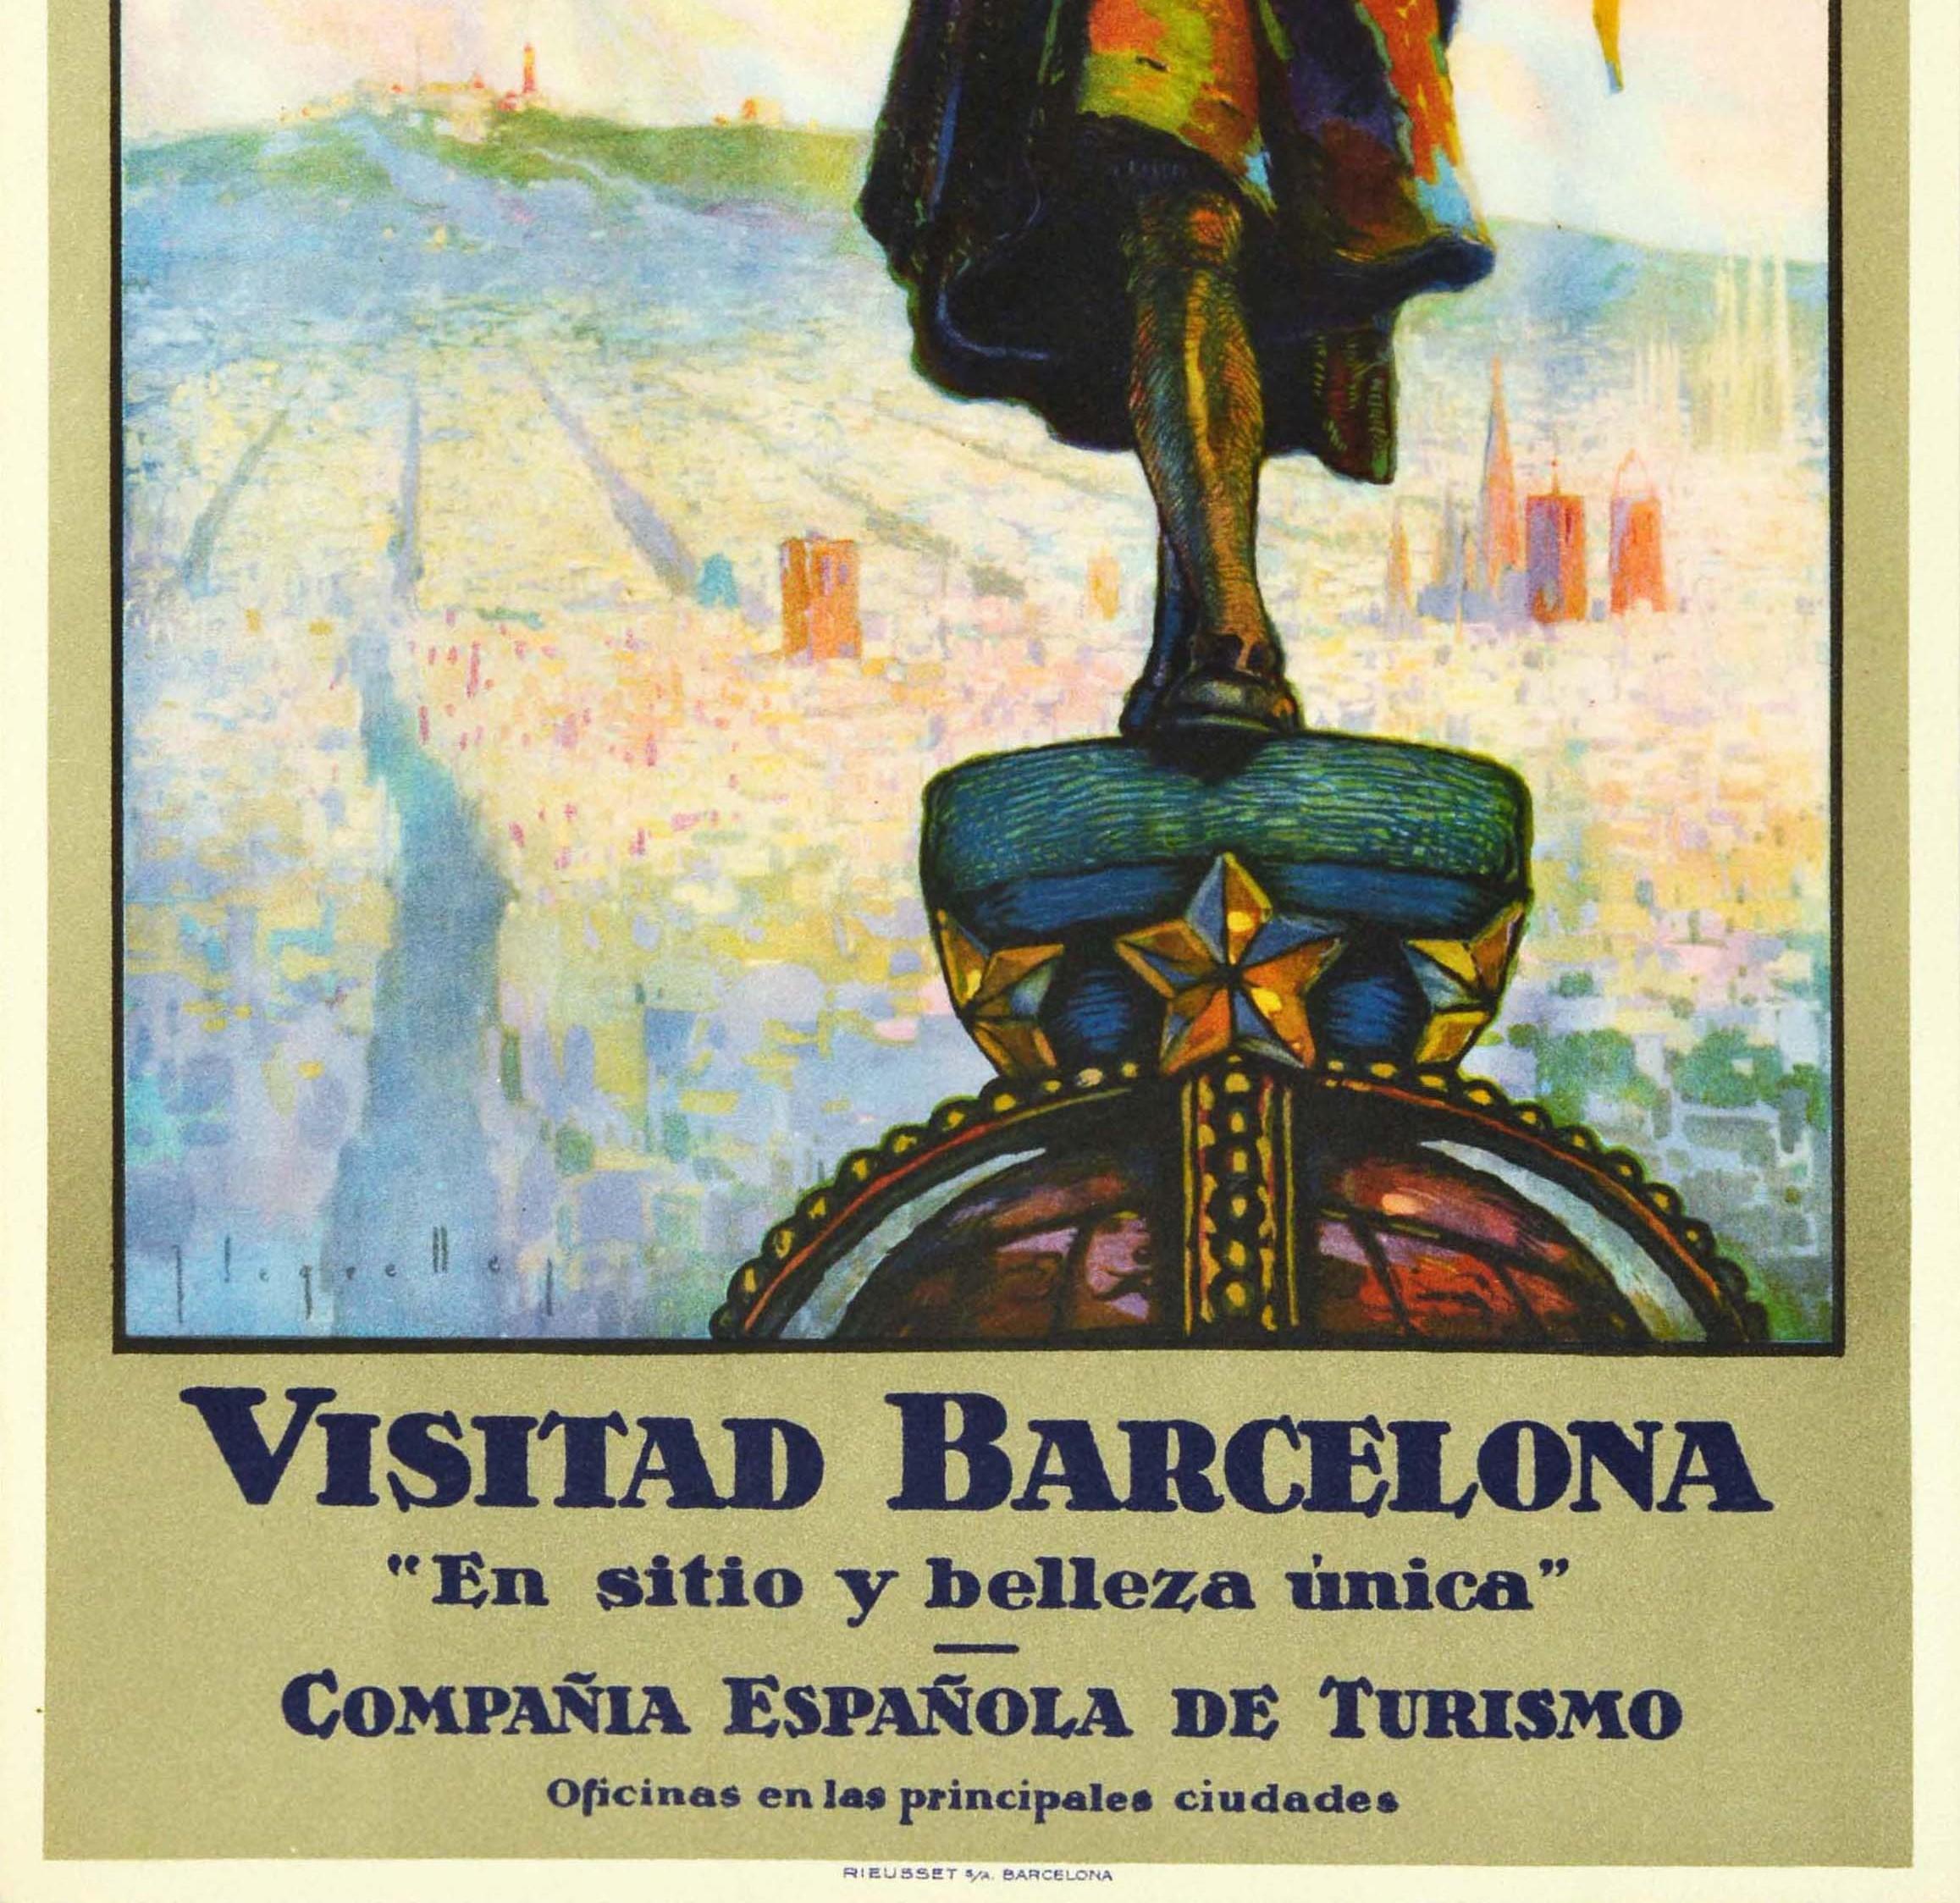 Spanish Original Vintage Travel Poster Visitad Barcelona Unique Beauty Columbus Monument For Sale